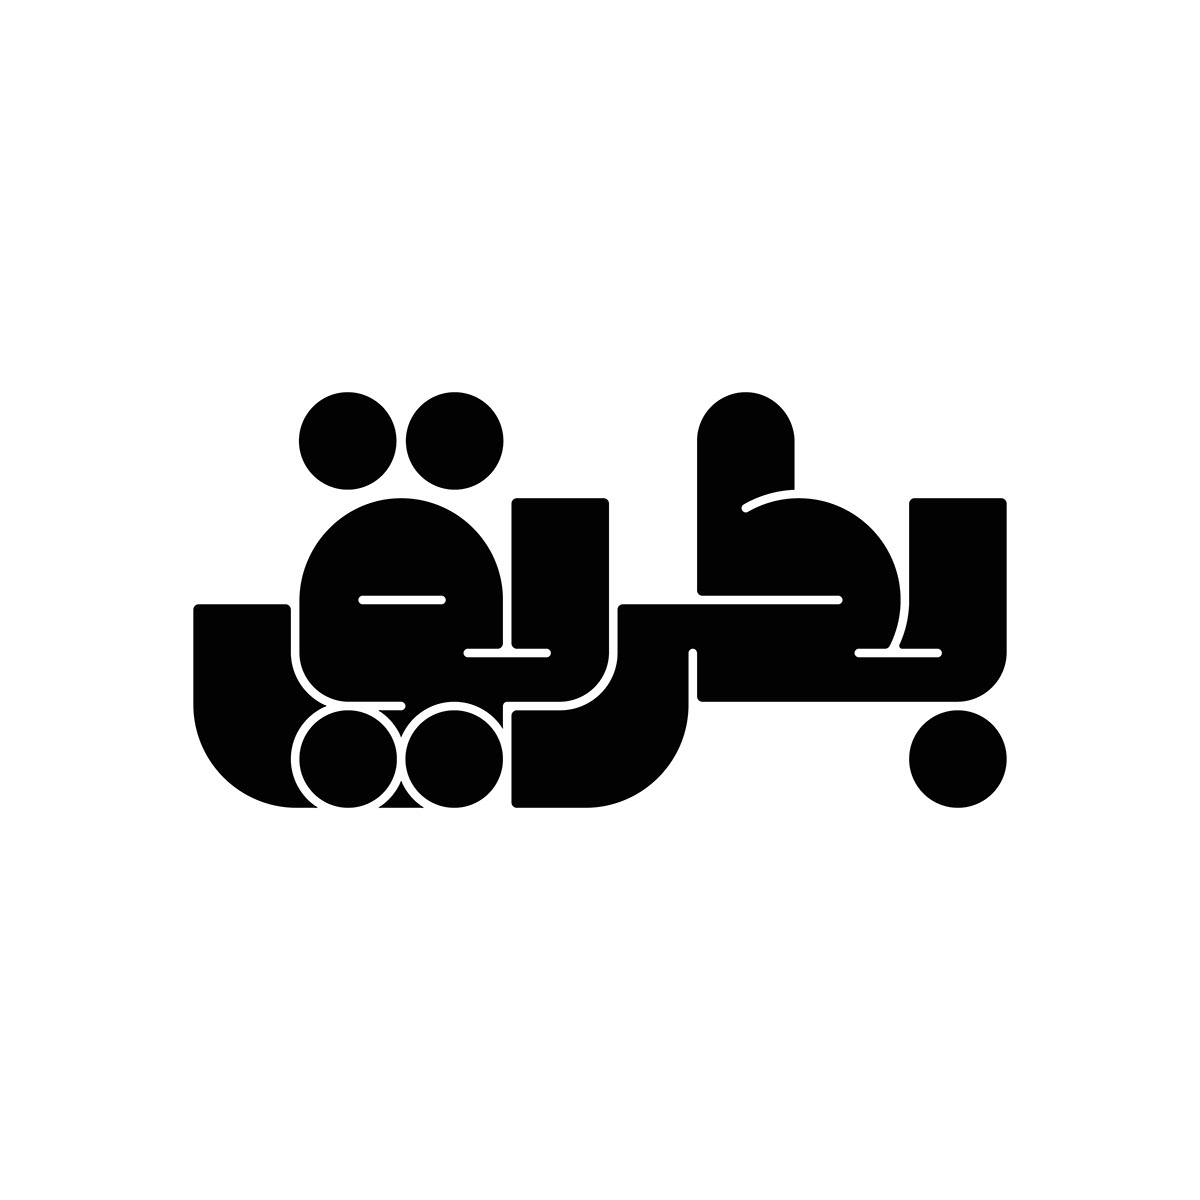 Arabic logo arabic type Calligraphy   font hebrayer lettering type design type experiments Typeface typography  